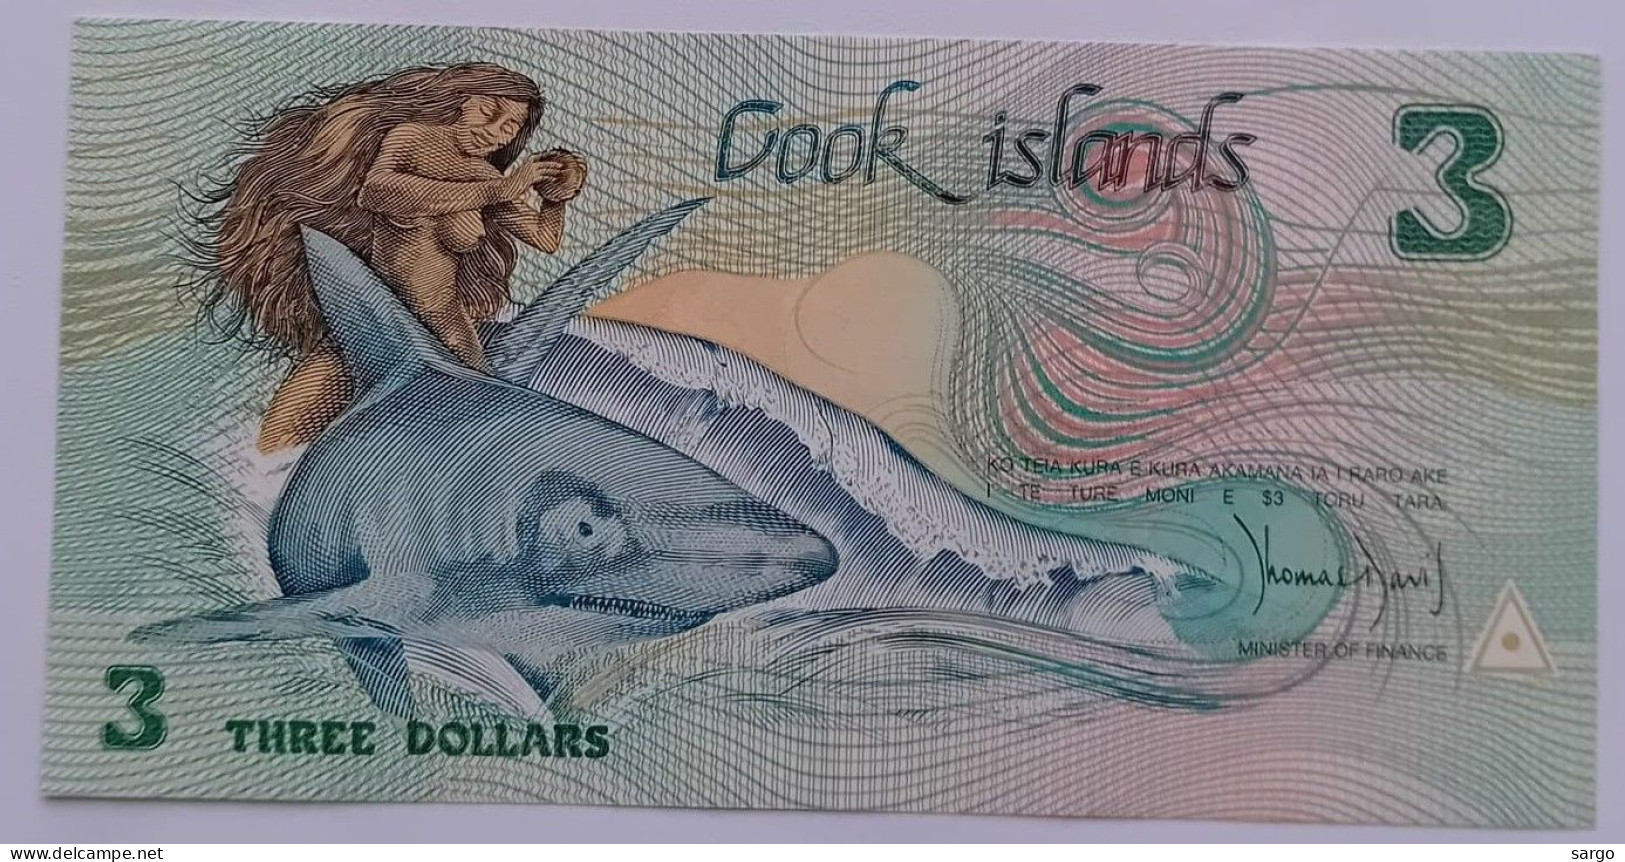 COOK ISLANDS - 3 DOLLARS - 1992 - UNC - P 6  - BANKNOTES - PAPER MONEY - CARTAMONETA - - Isole Cook